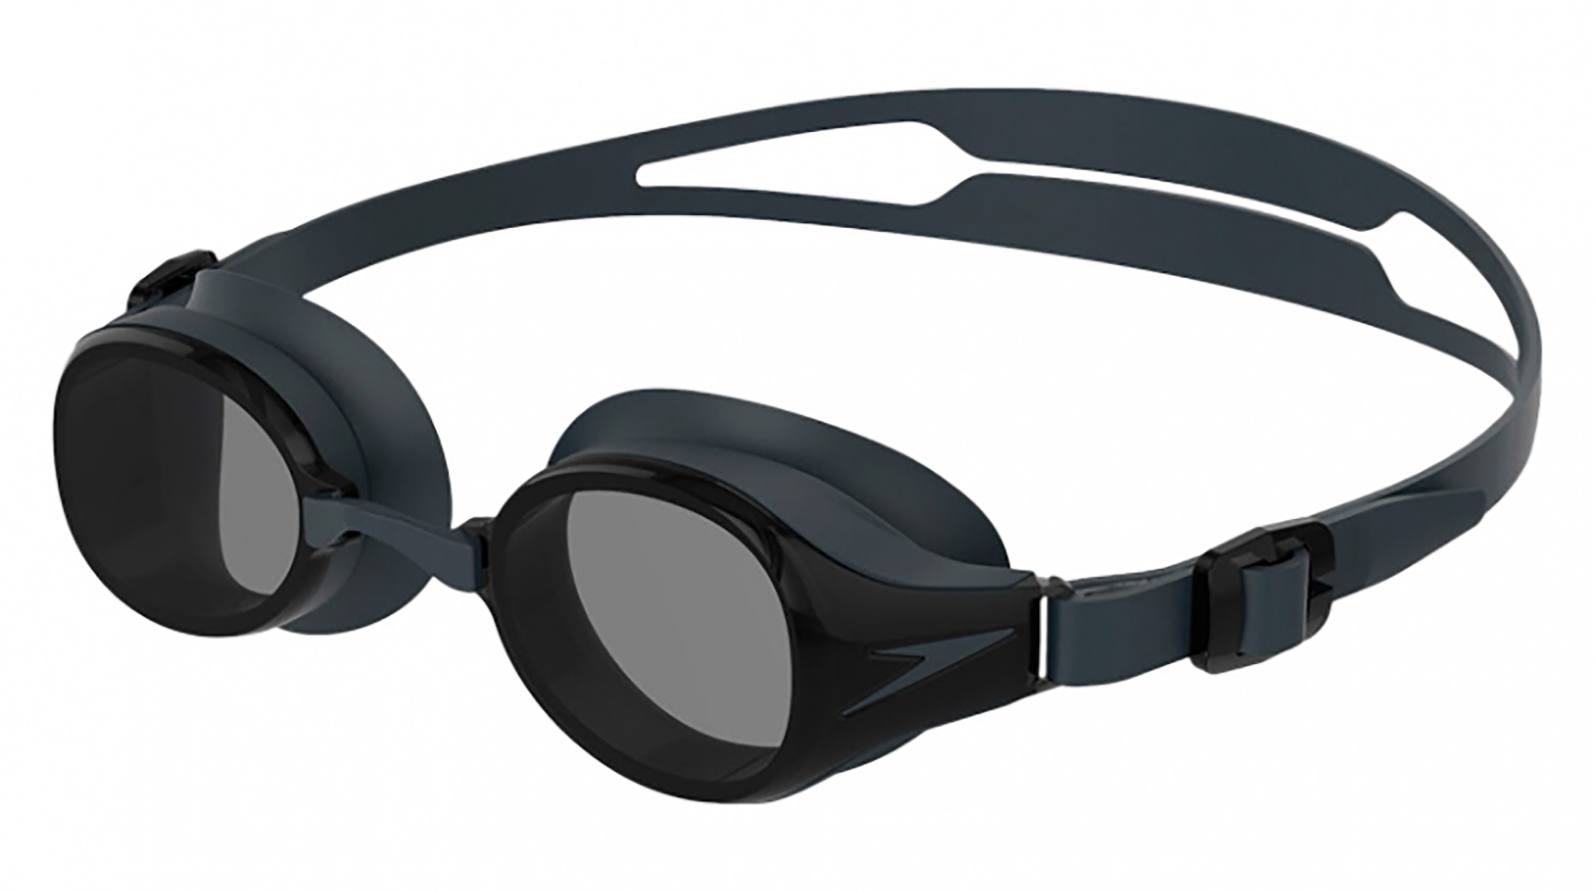 Speedo Очки для плавания Hydropure Optical F808 -2,5 speedo очки для плавания hydropure optical f809 5 5